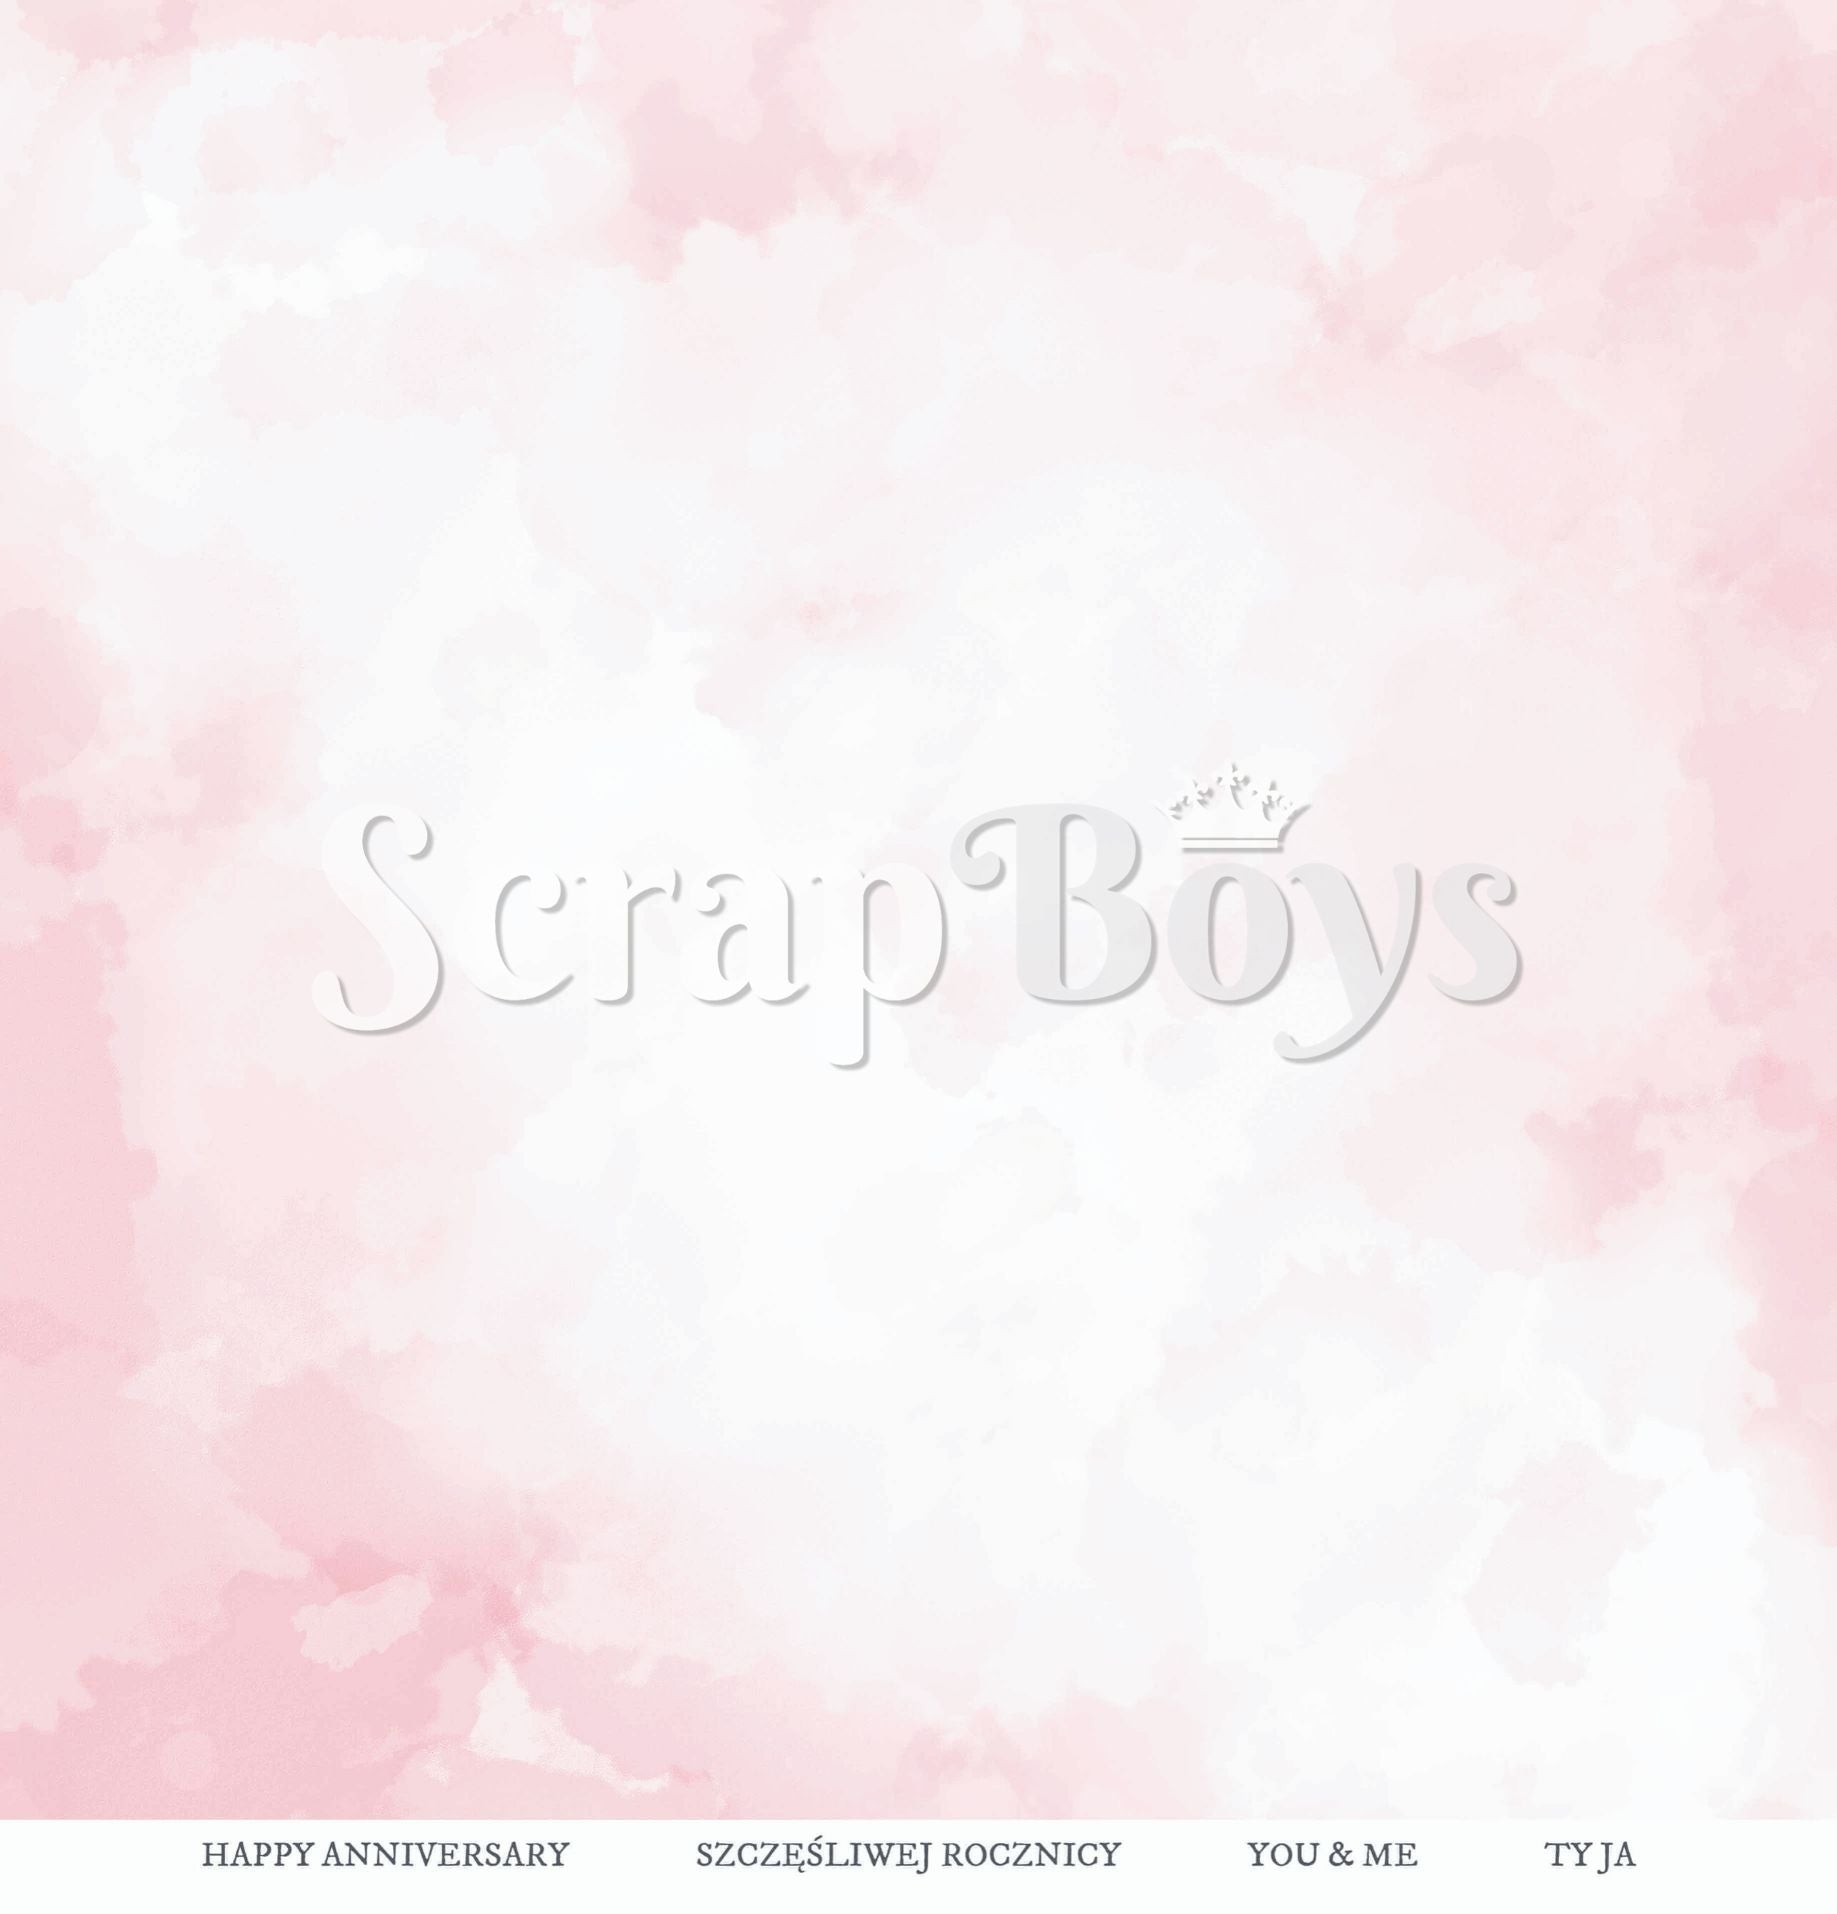 Scrapboys -  Primavera - Paper Pad  -  12x12"